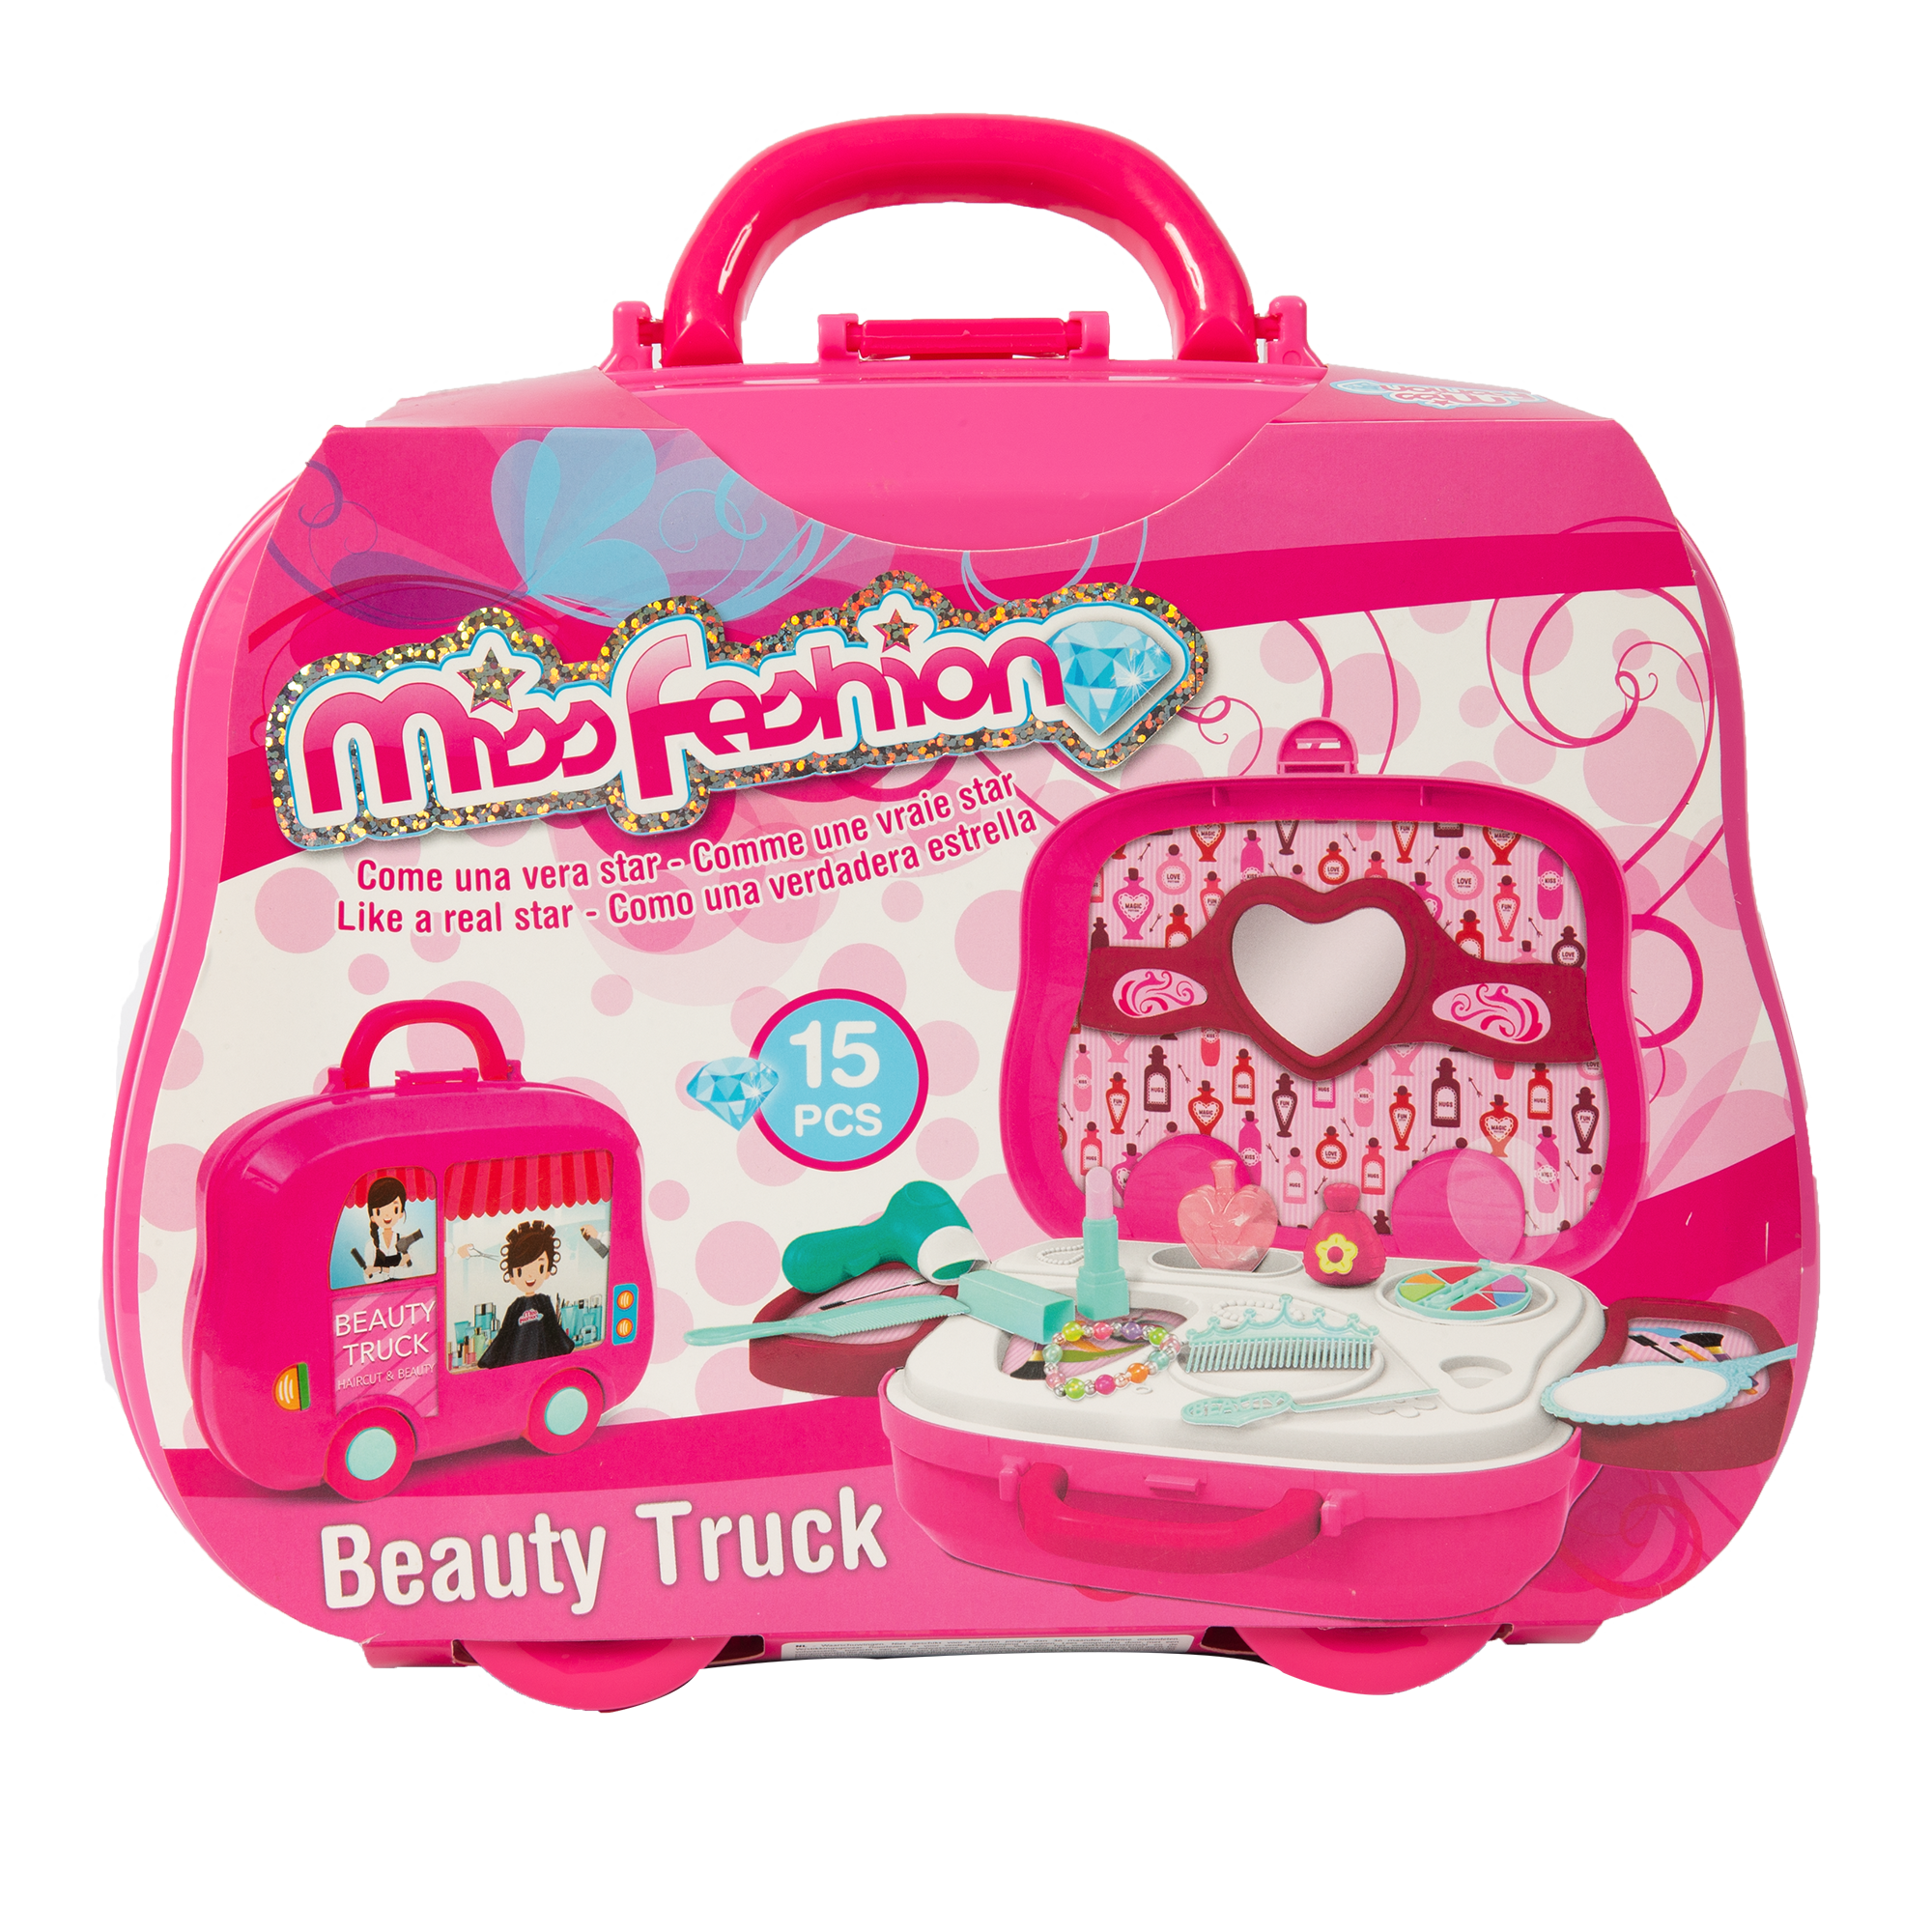 Beauty truck - MISS FASHION